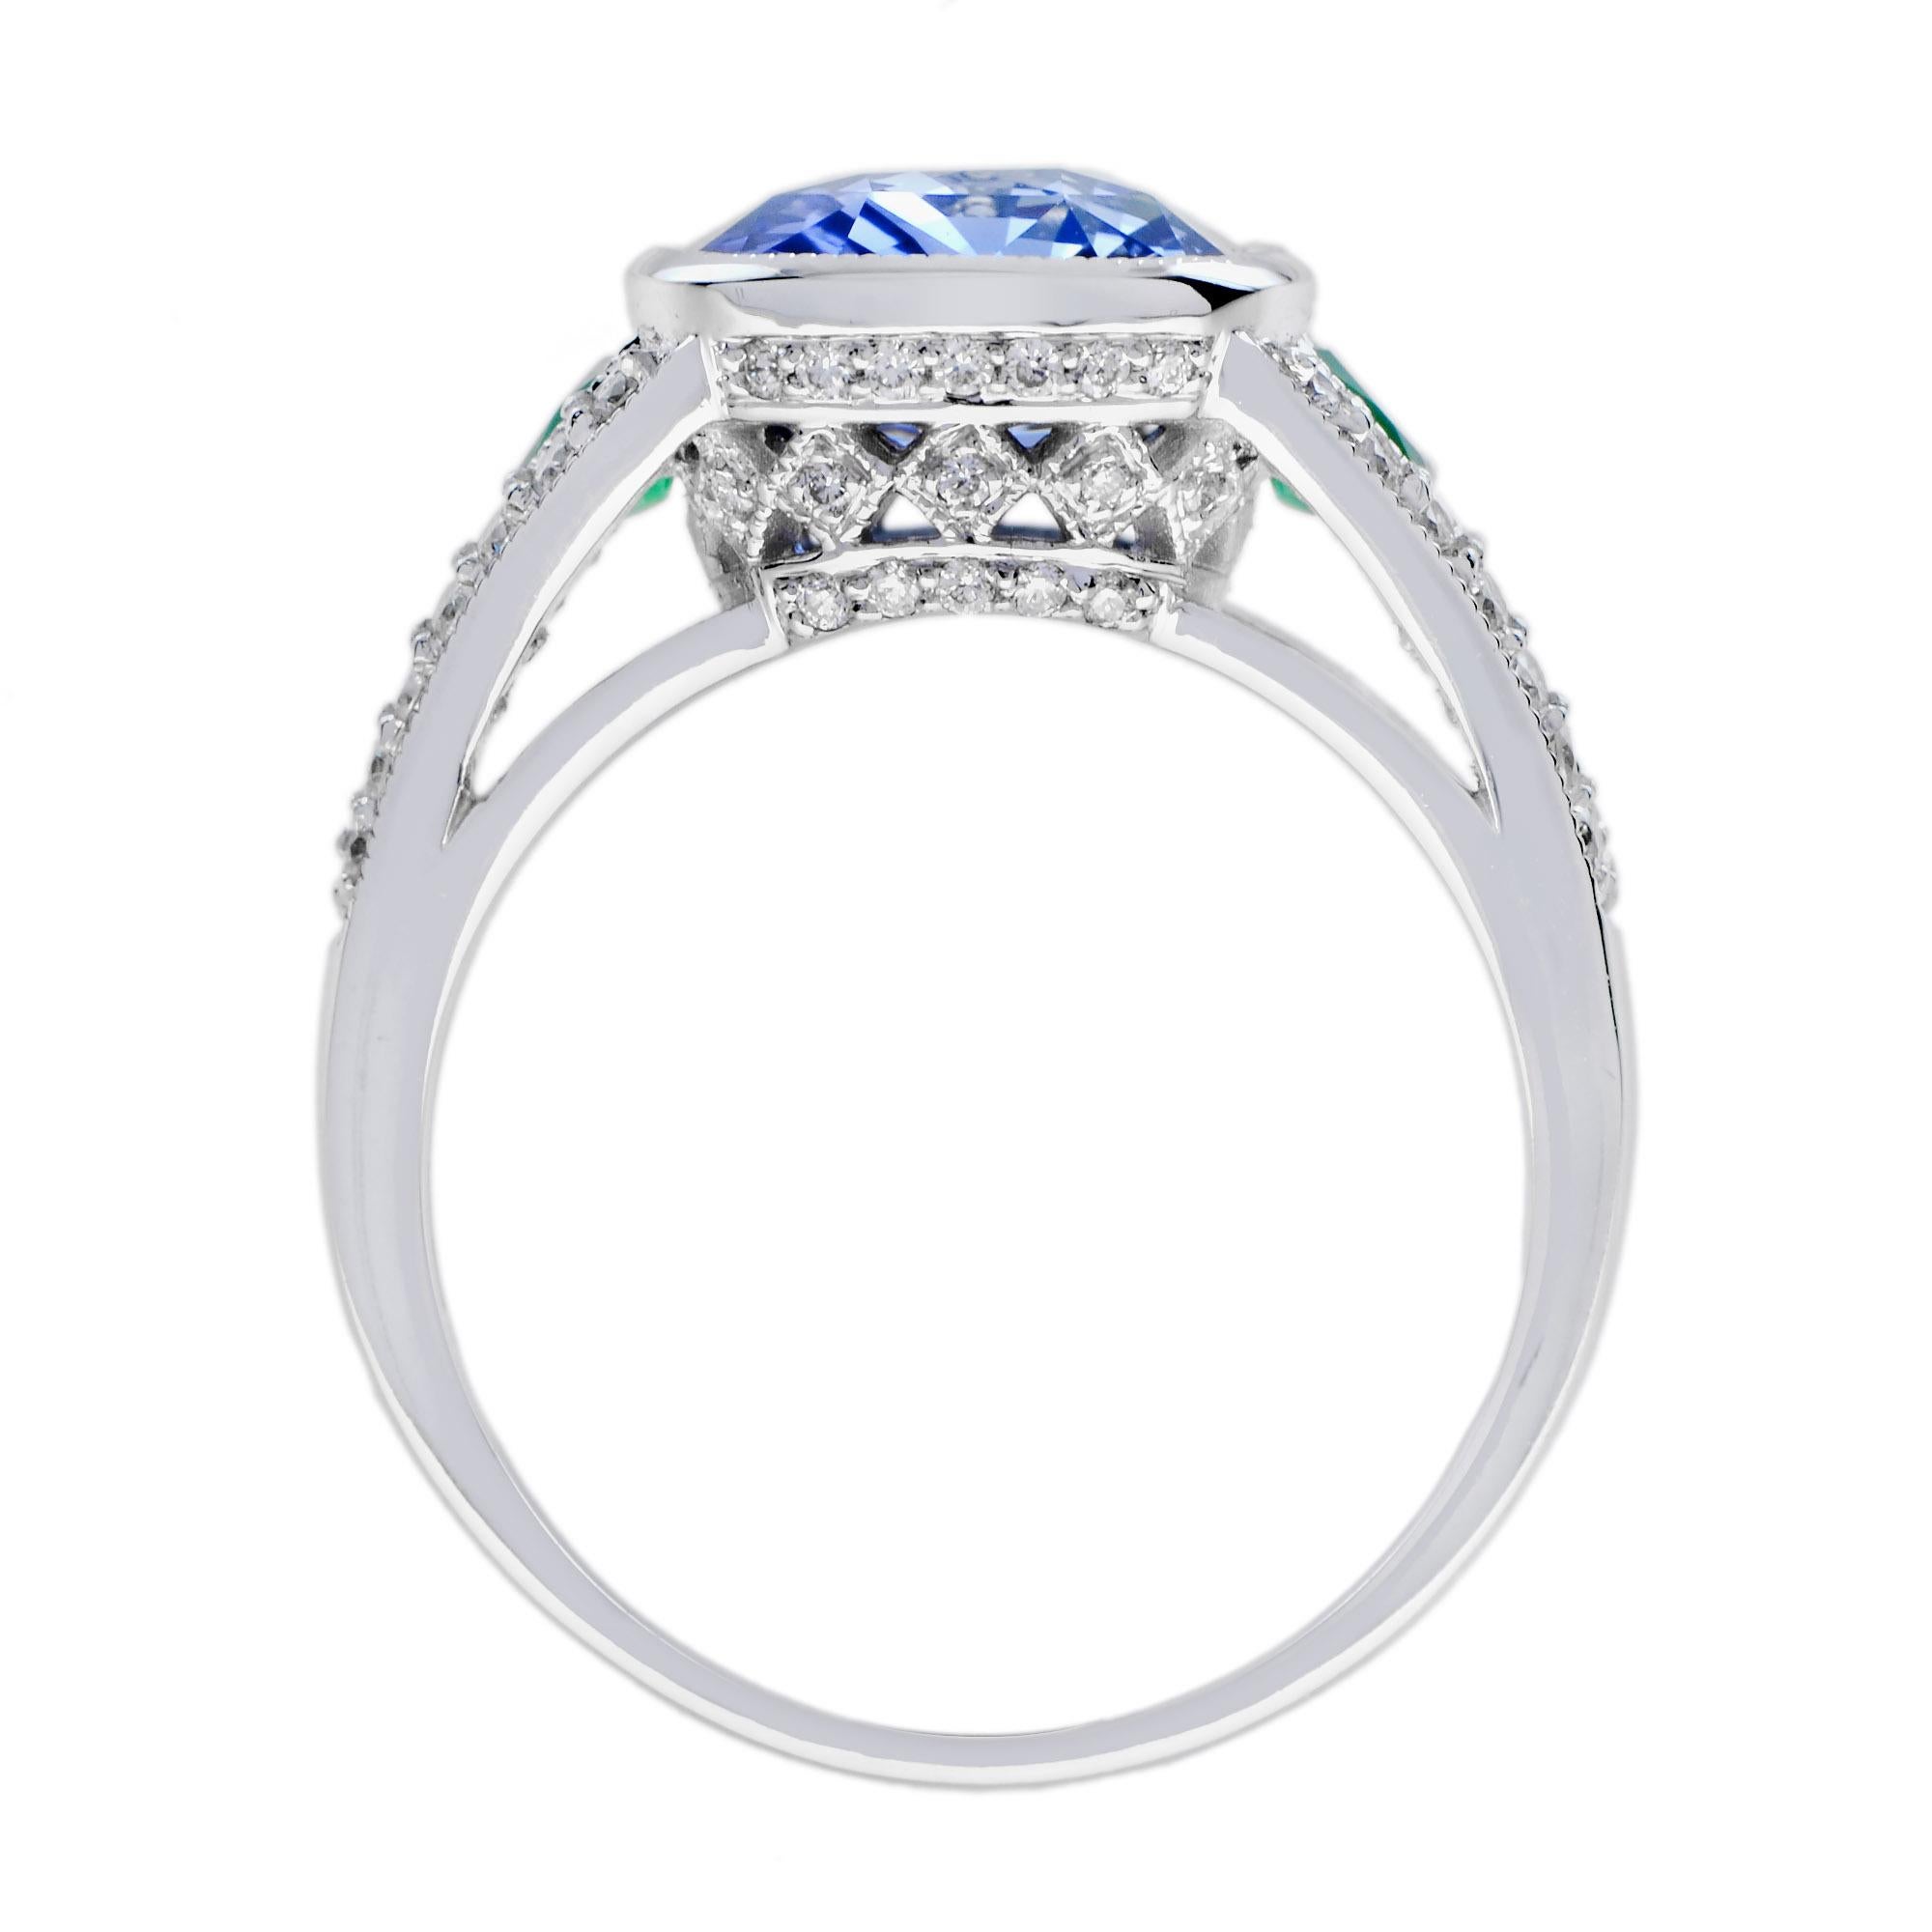 Certified 4.47 Ct. Ceylon Sapphire Emerald Diamond Ring in 18K White Gold For Sale 3